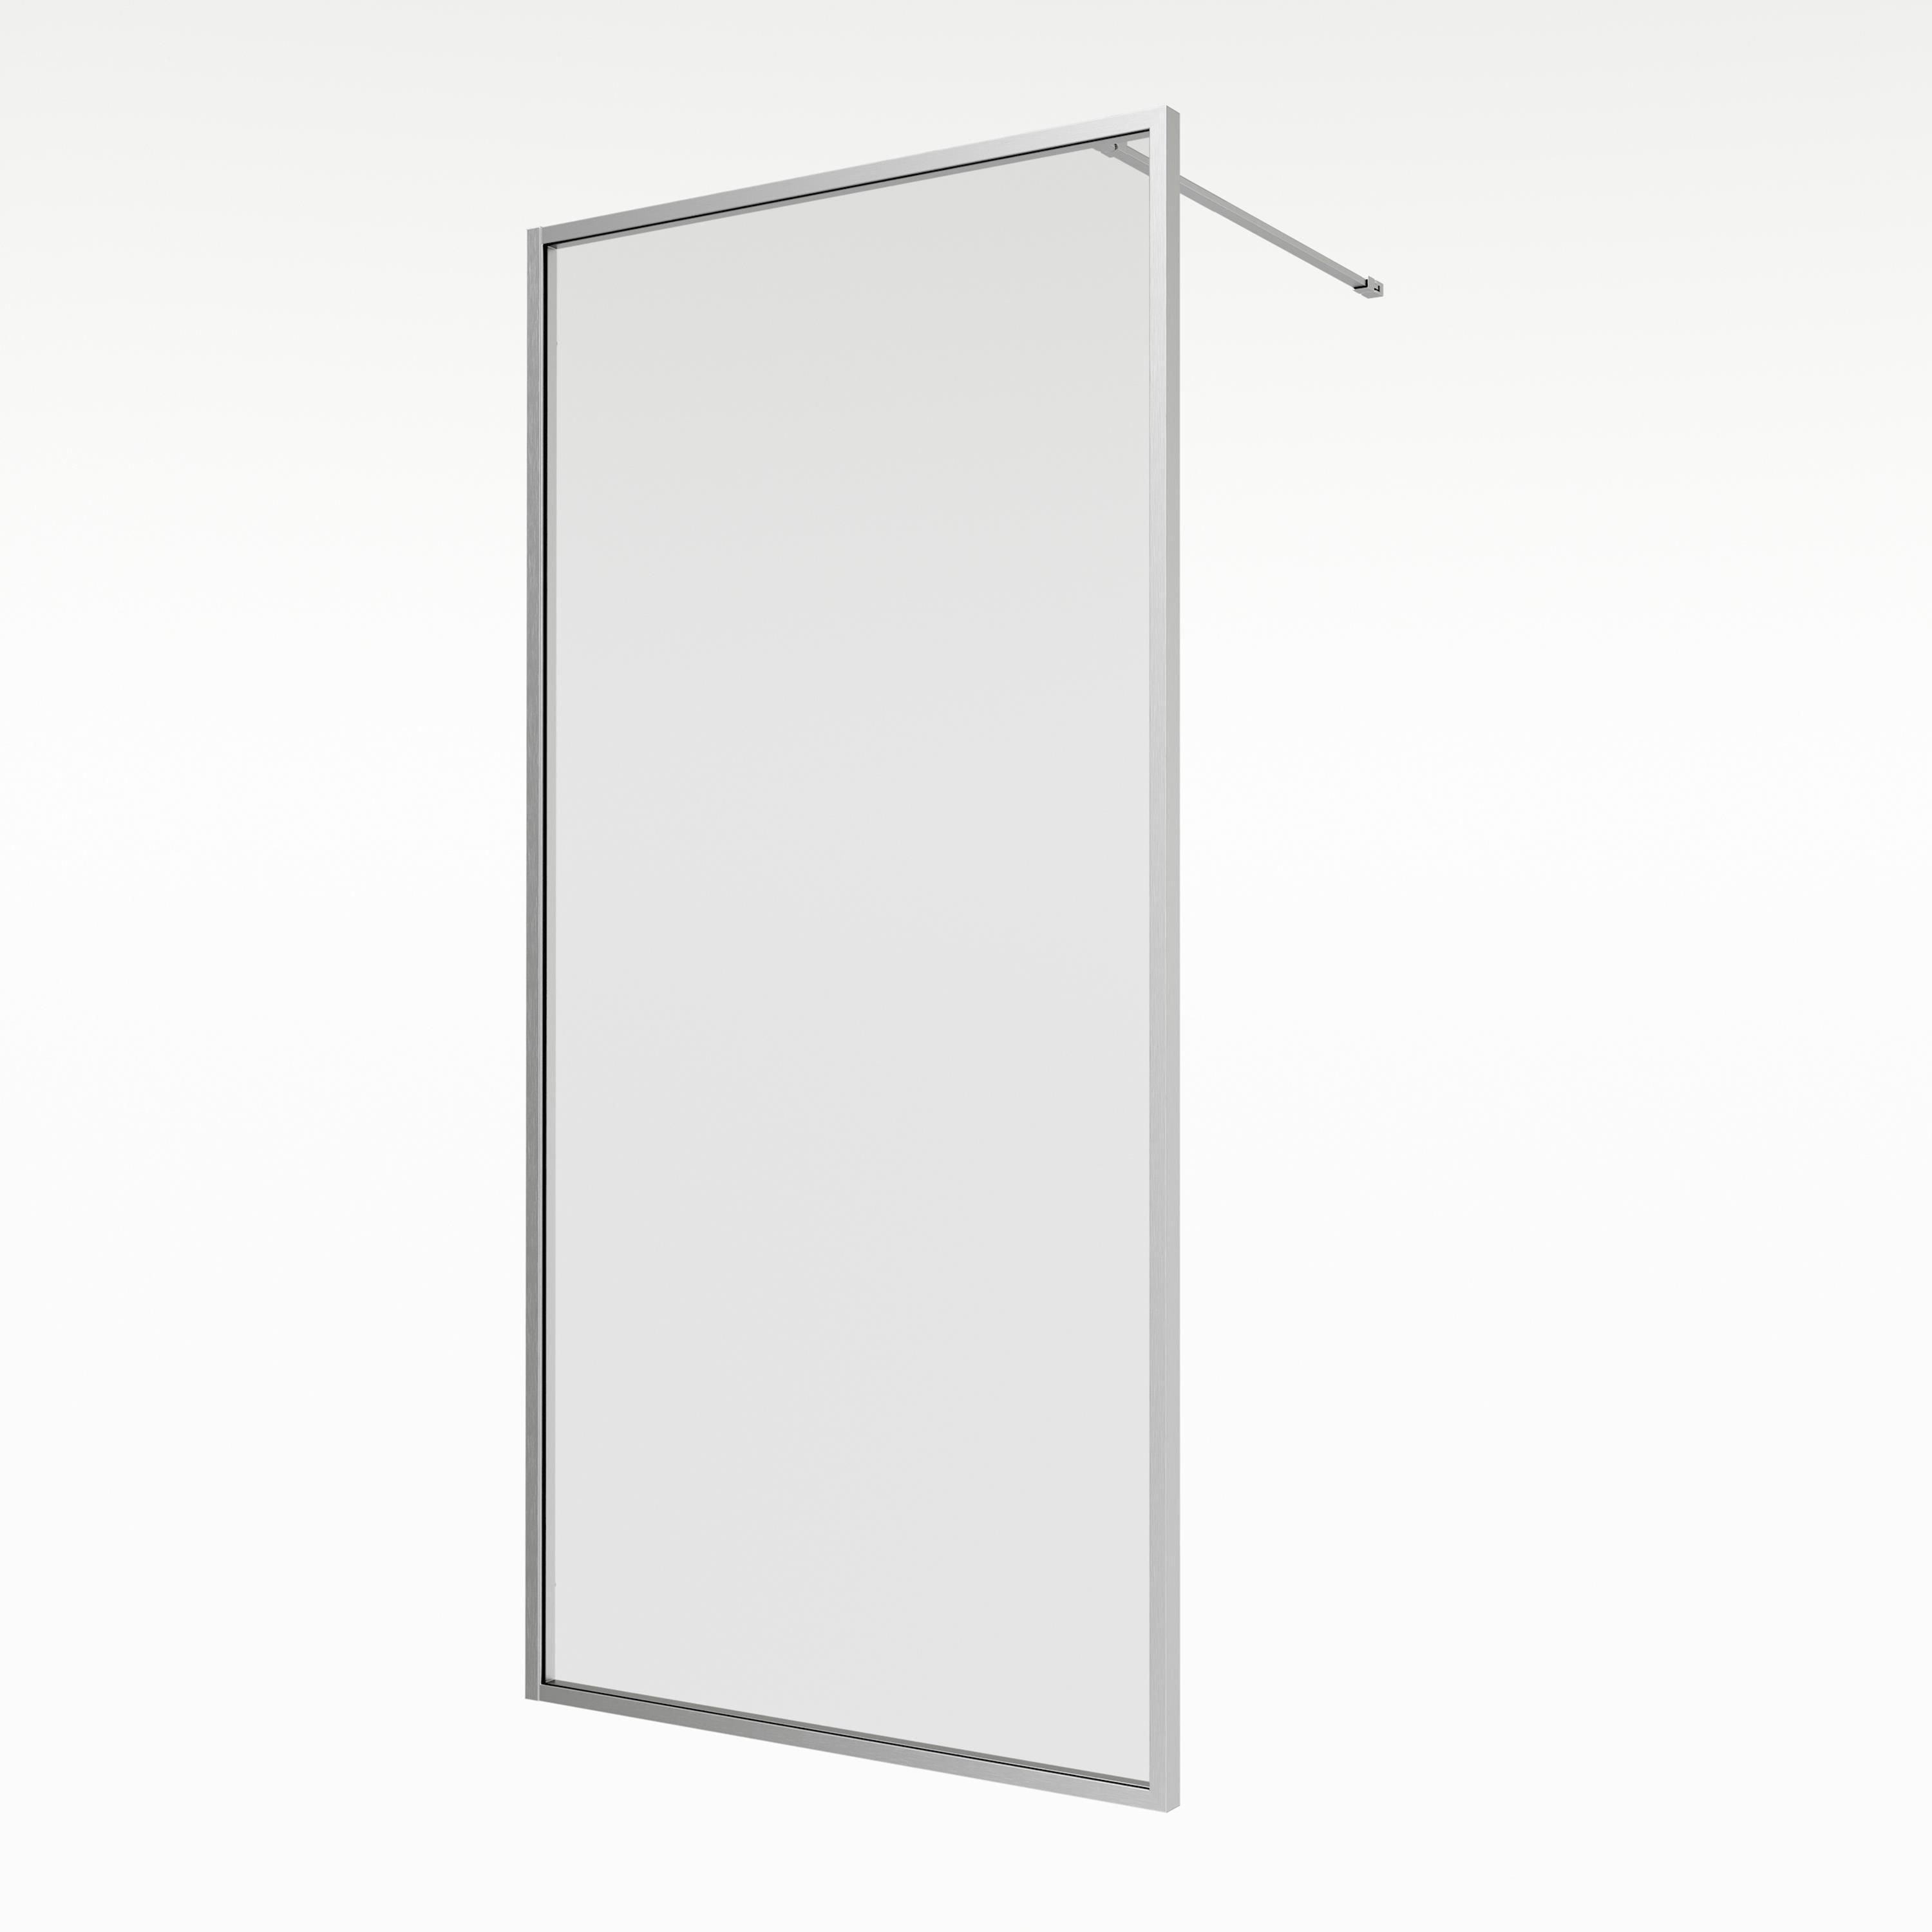 Aqualux AQ PRO Polished Silver Clear Single Wet room glass screen (H)200cm (W)120cm